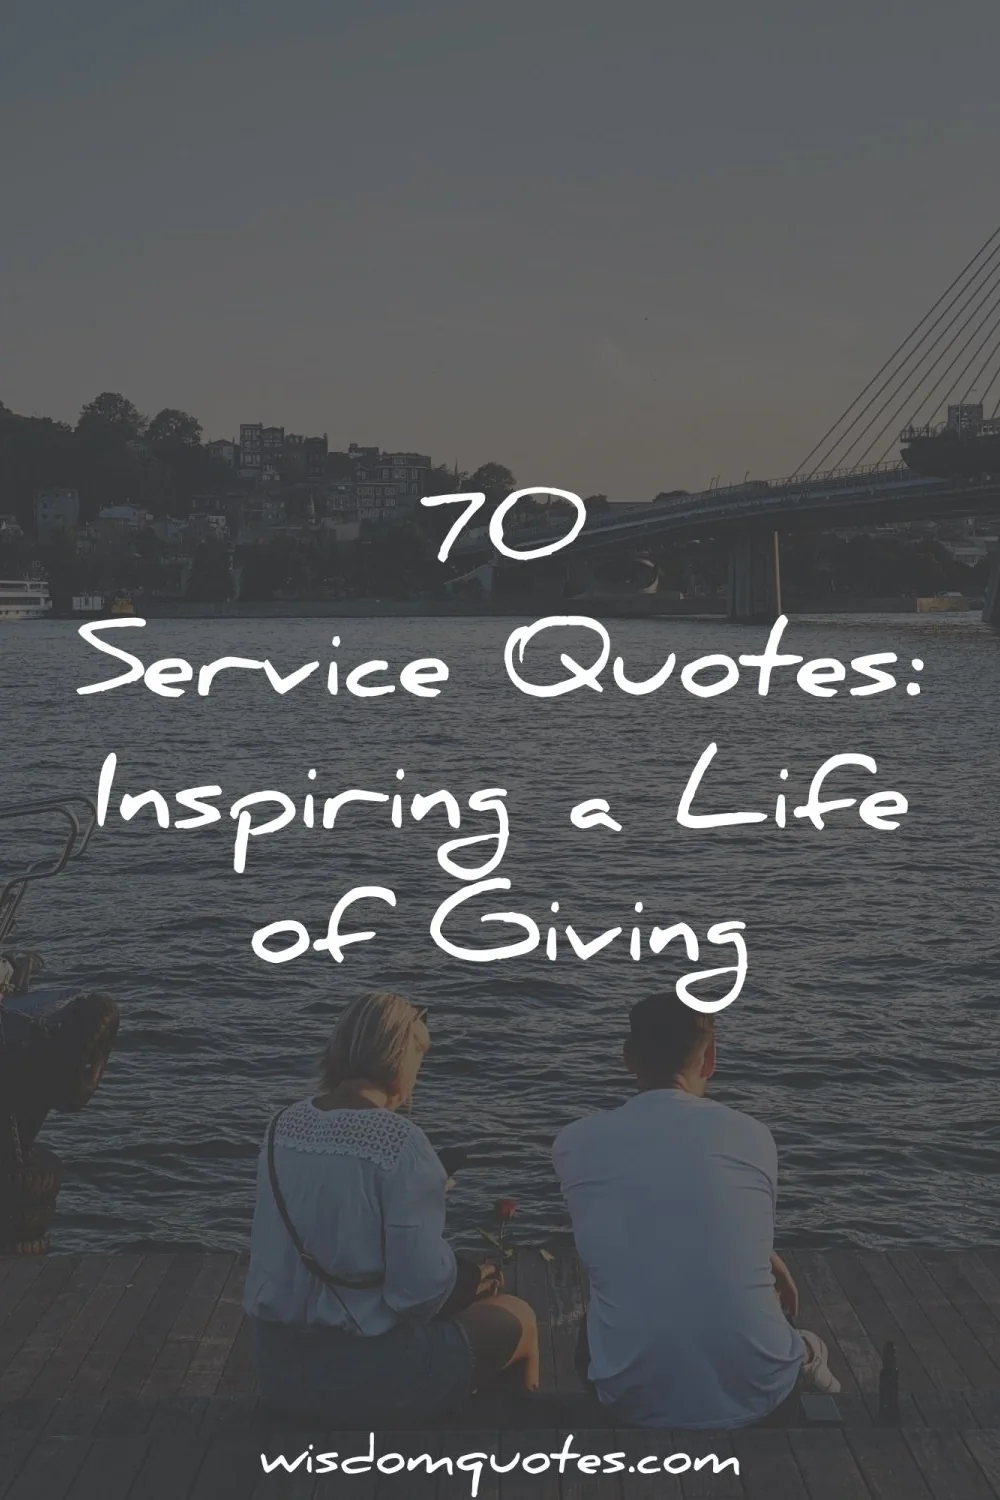 service quotes inspiring life giving wisdom